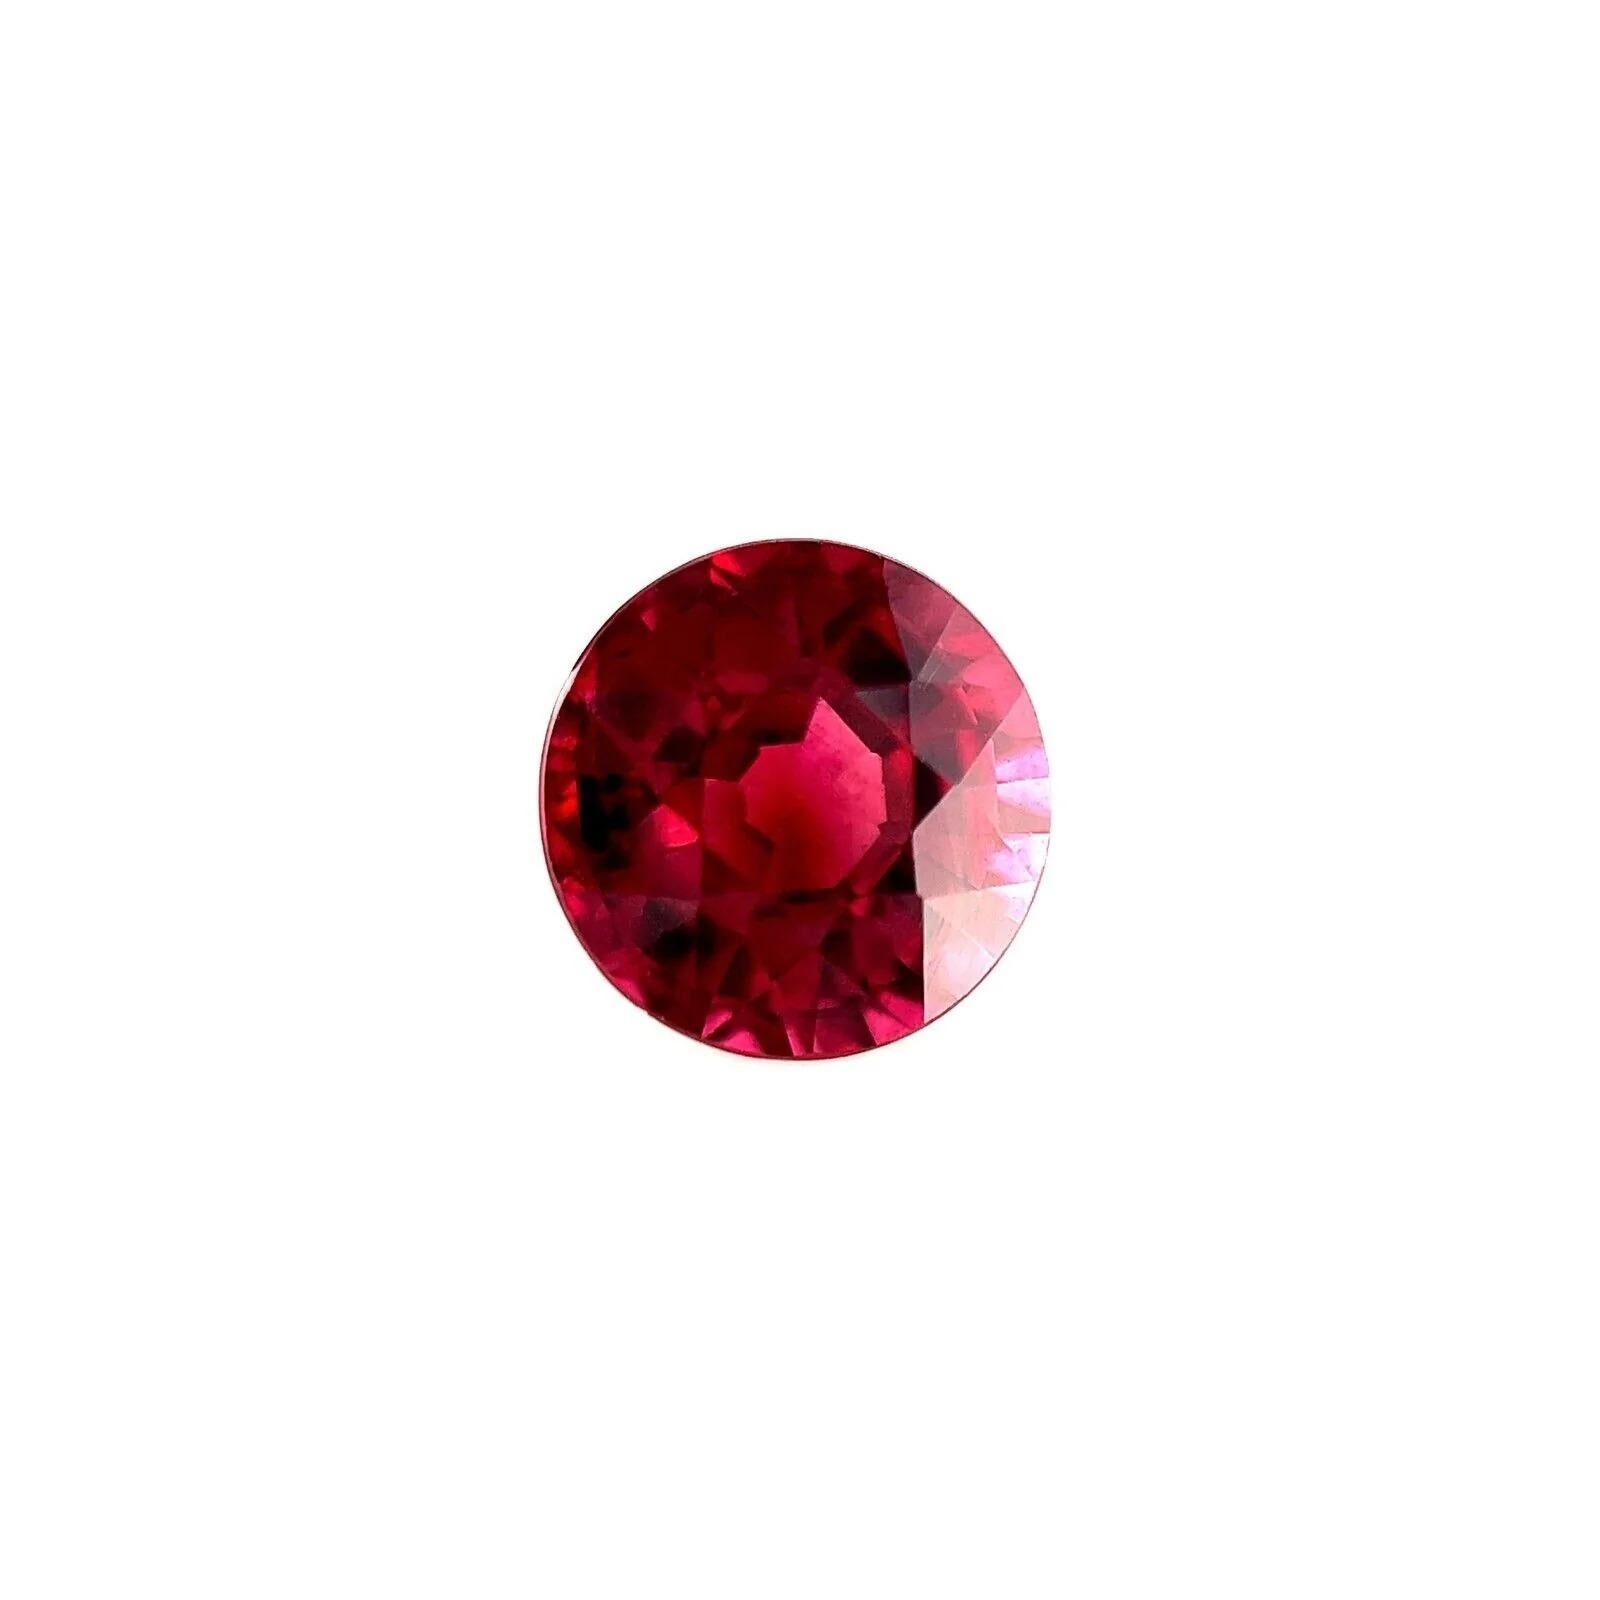 Fine 2.45ct Vivid Purple Pink Rhodolite Garnet Round Diamond Cut 7.8mm Loose Gem

Fine Natural Vivid Pink Purple Rhodolite Garnet Gem. 
2.45 Carat with a beautiful vivid pink purple colour and excellent clarity, a very clean stone. Also has a very